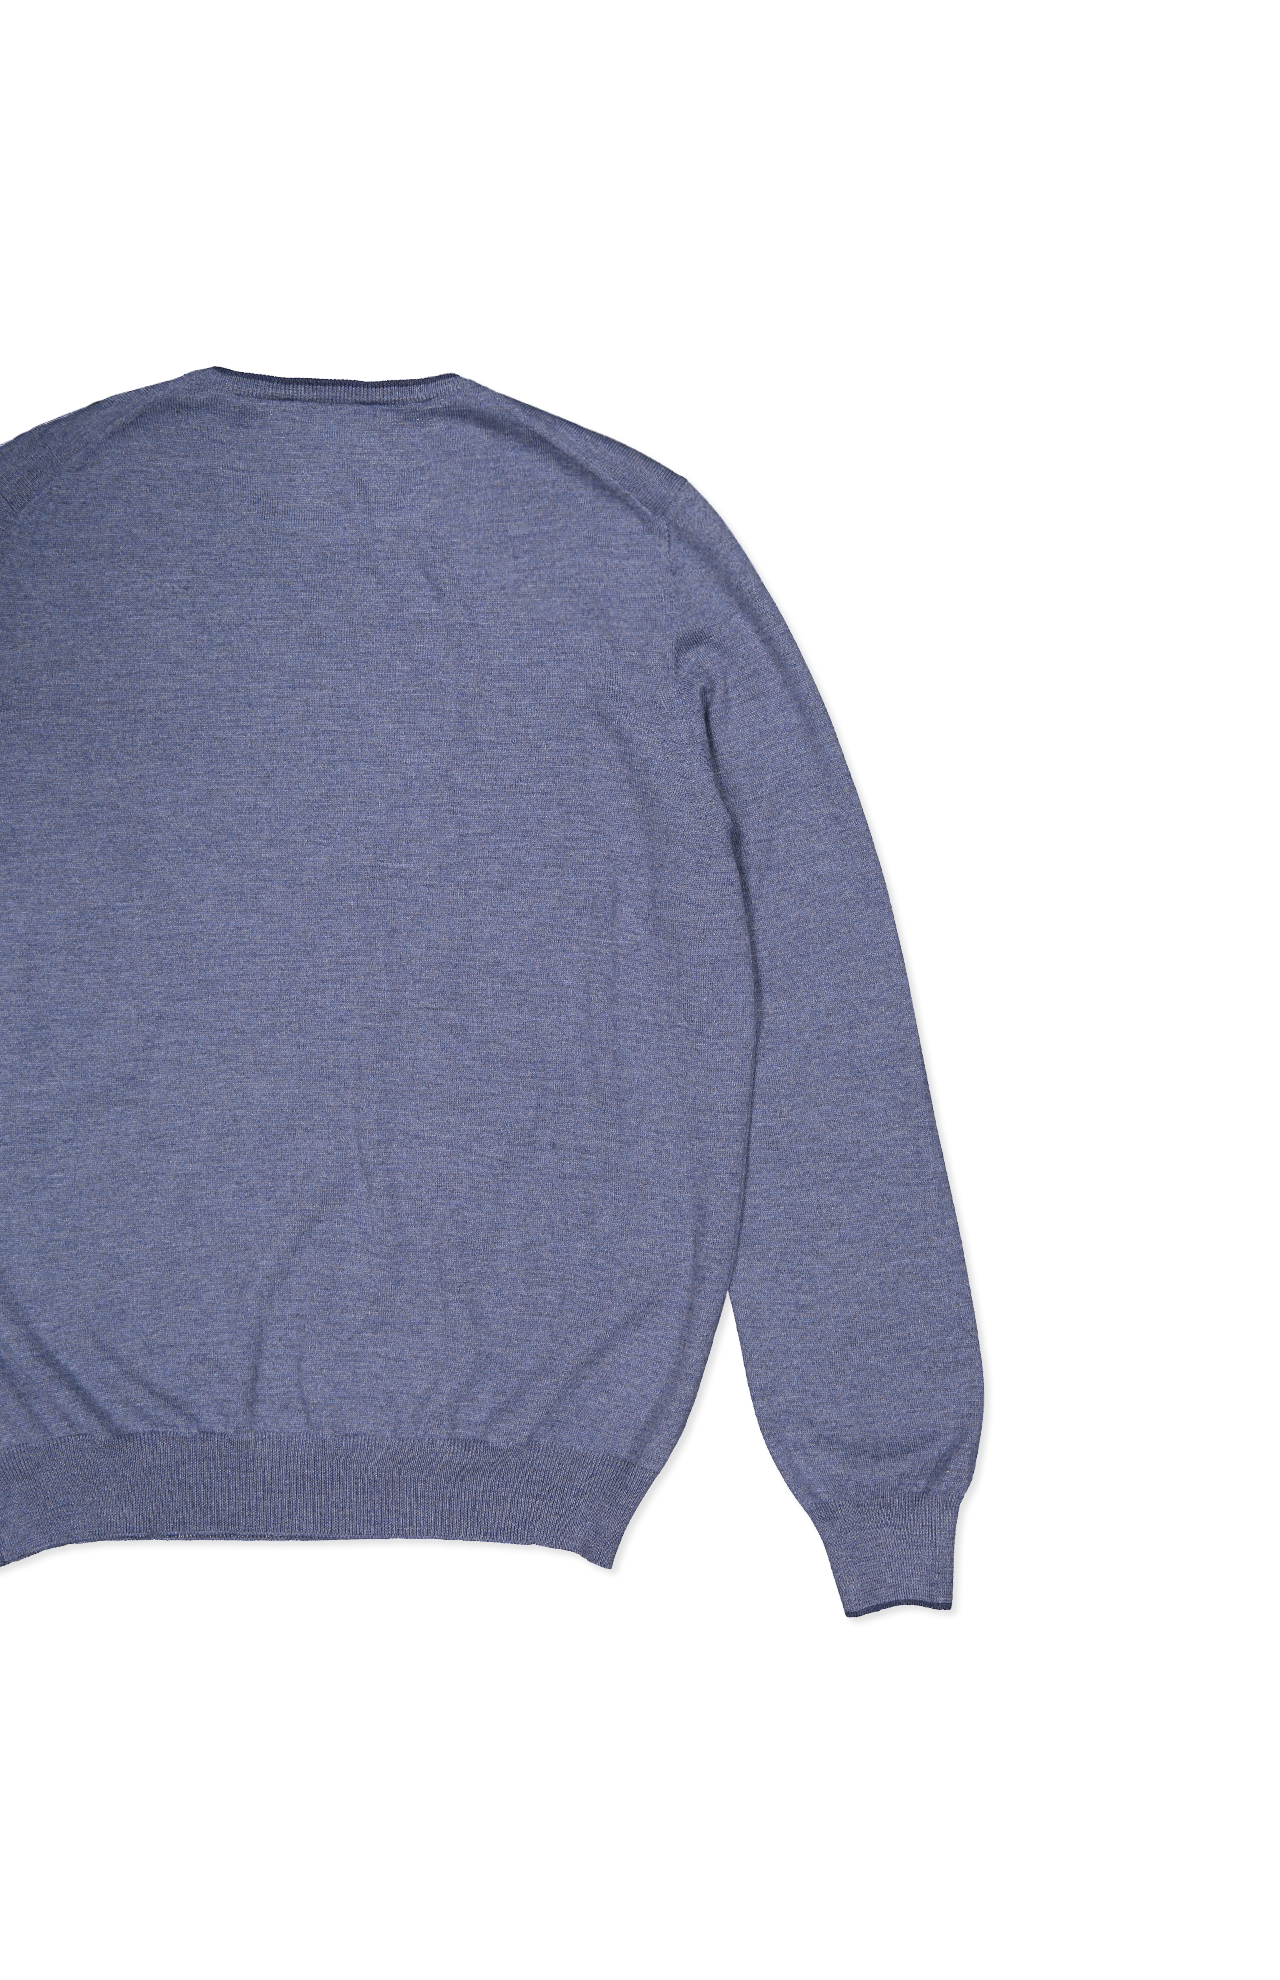 Gran Sasso Tipping Crewneck Sweater Steel Blue Back Flat Lay Image (6897540923507)